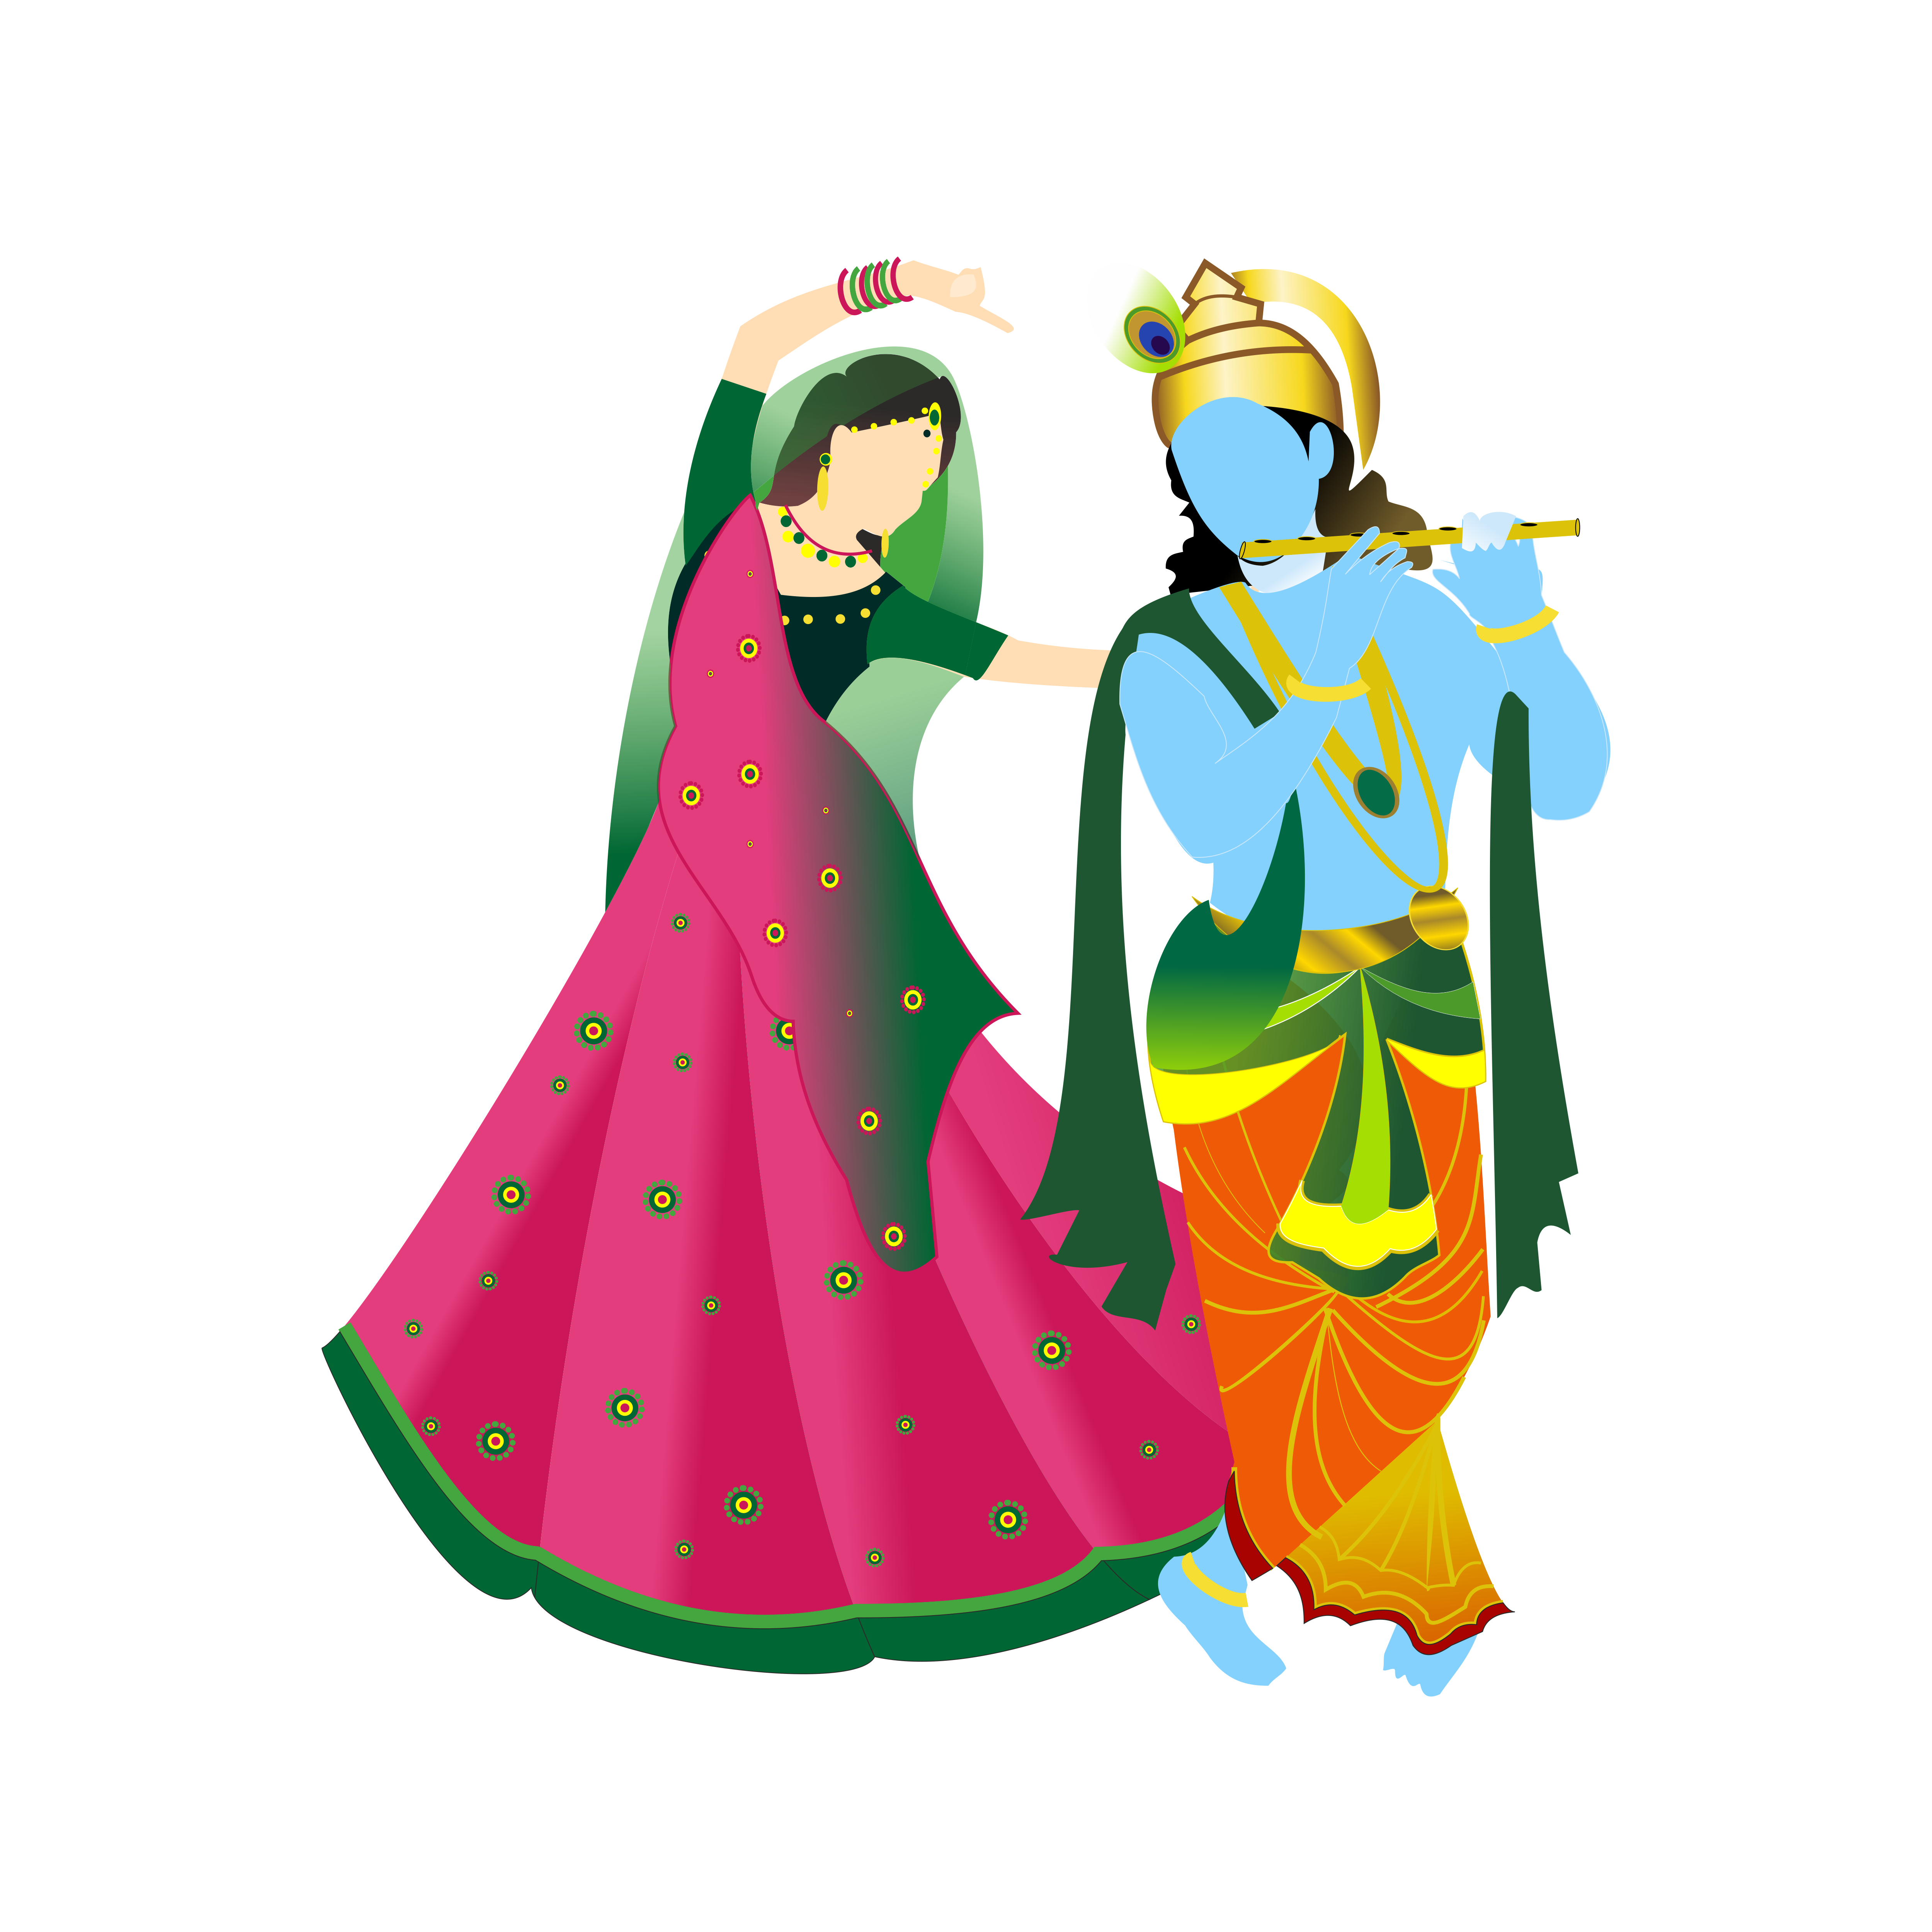 Pngtree—lord krishna radha vector illustration_6563717